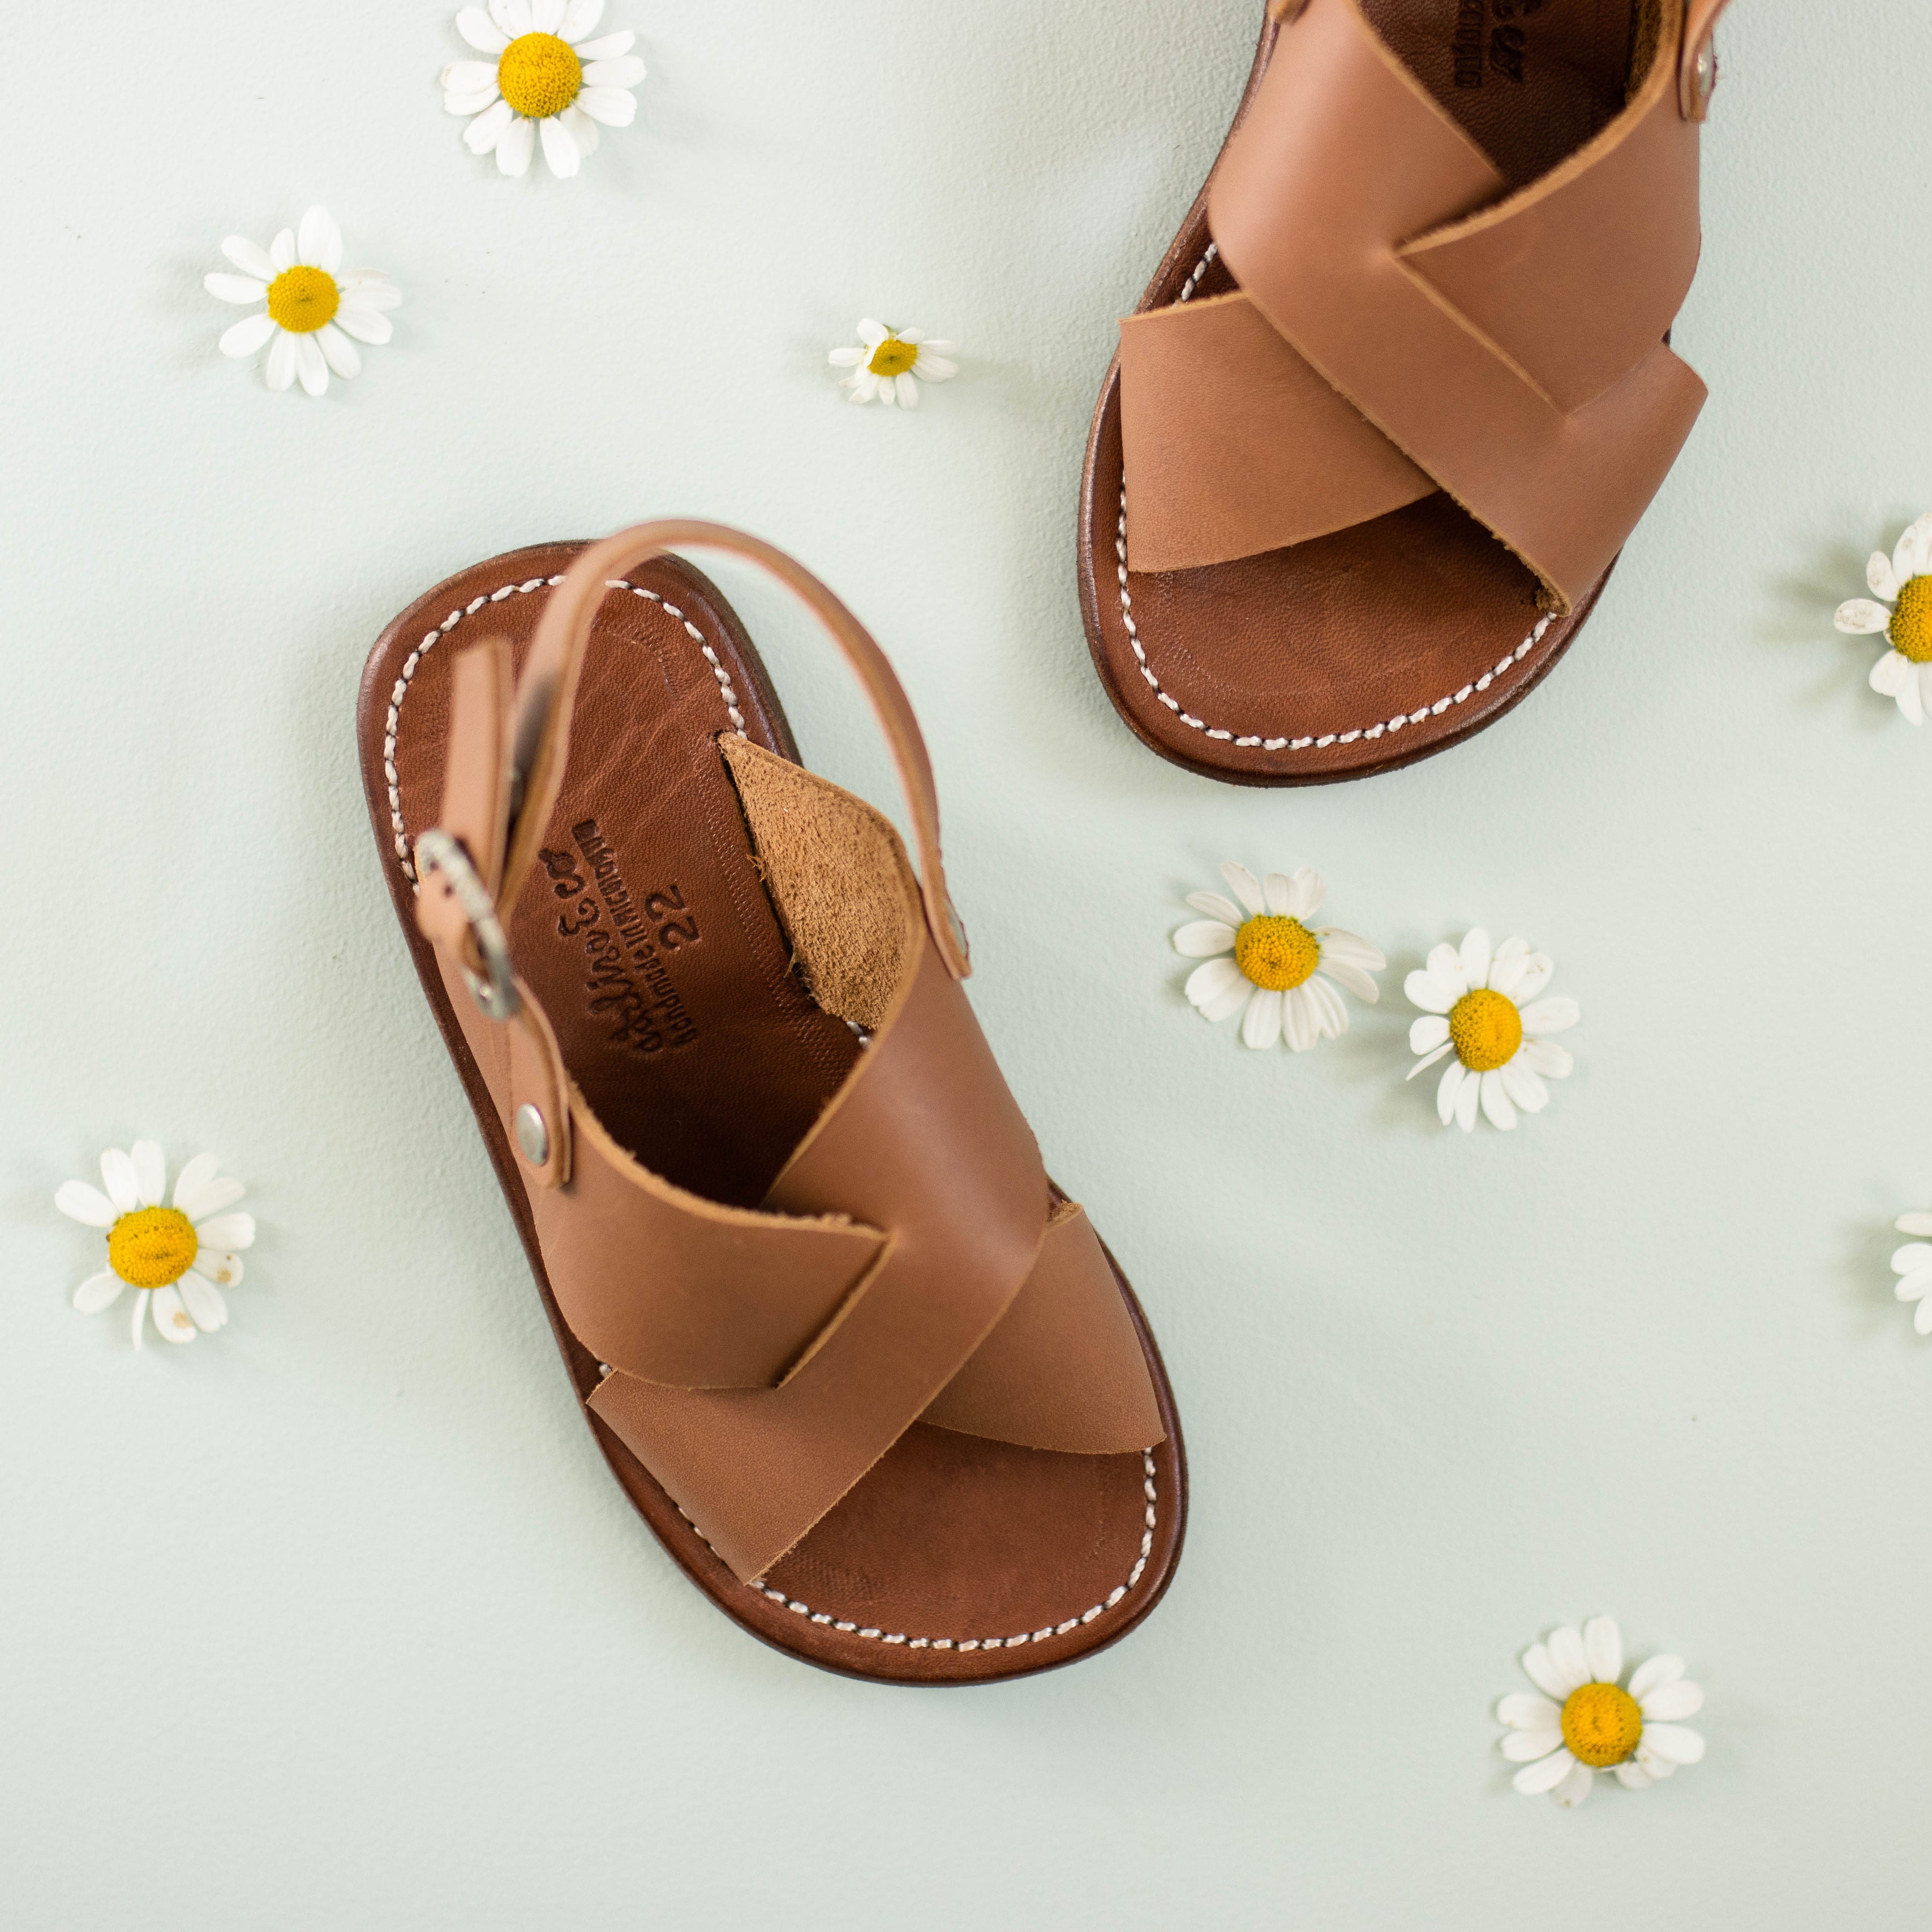 Cross strap, medium brown leather sandals for children. Unisex design.